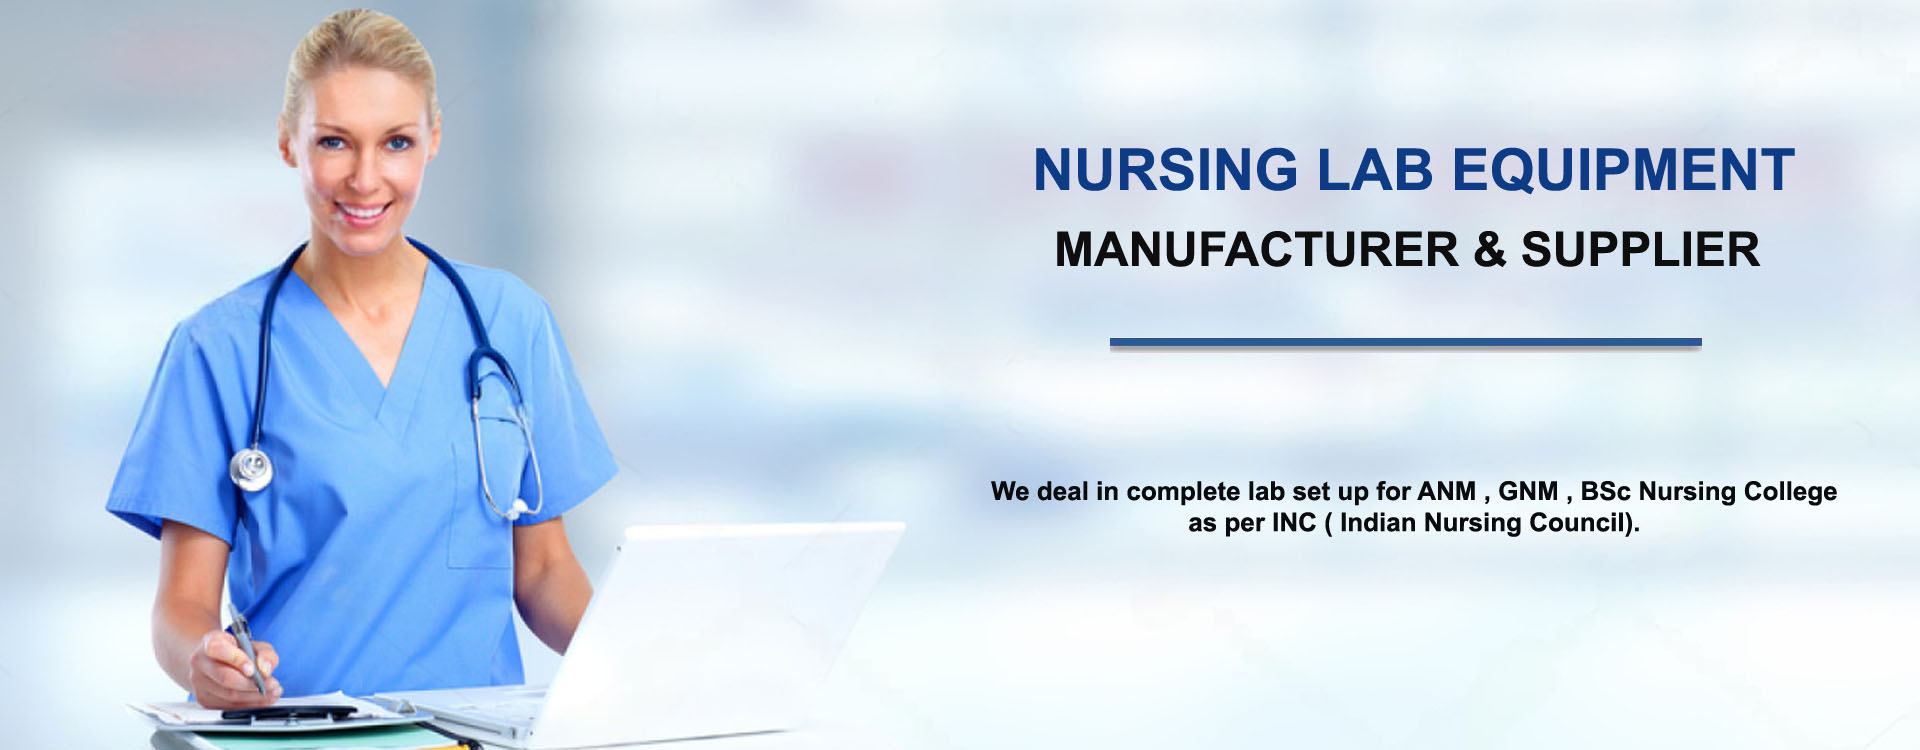 nursing lab manufacturer